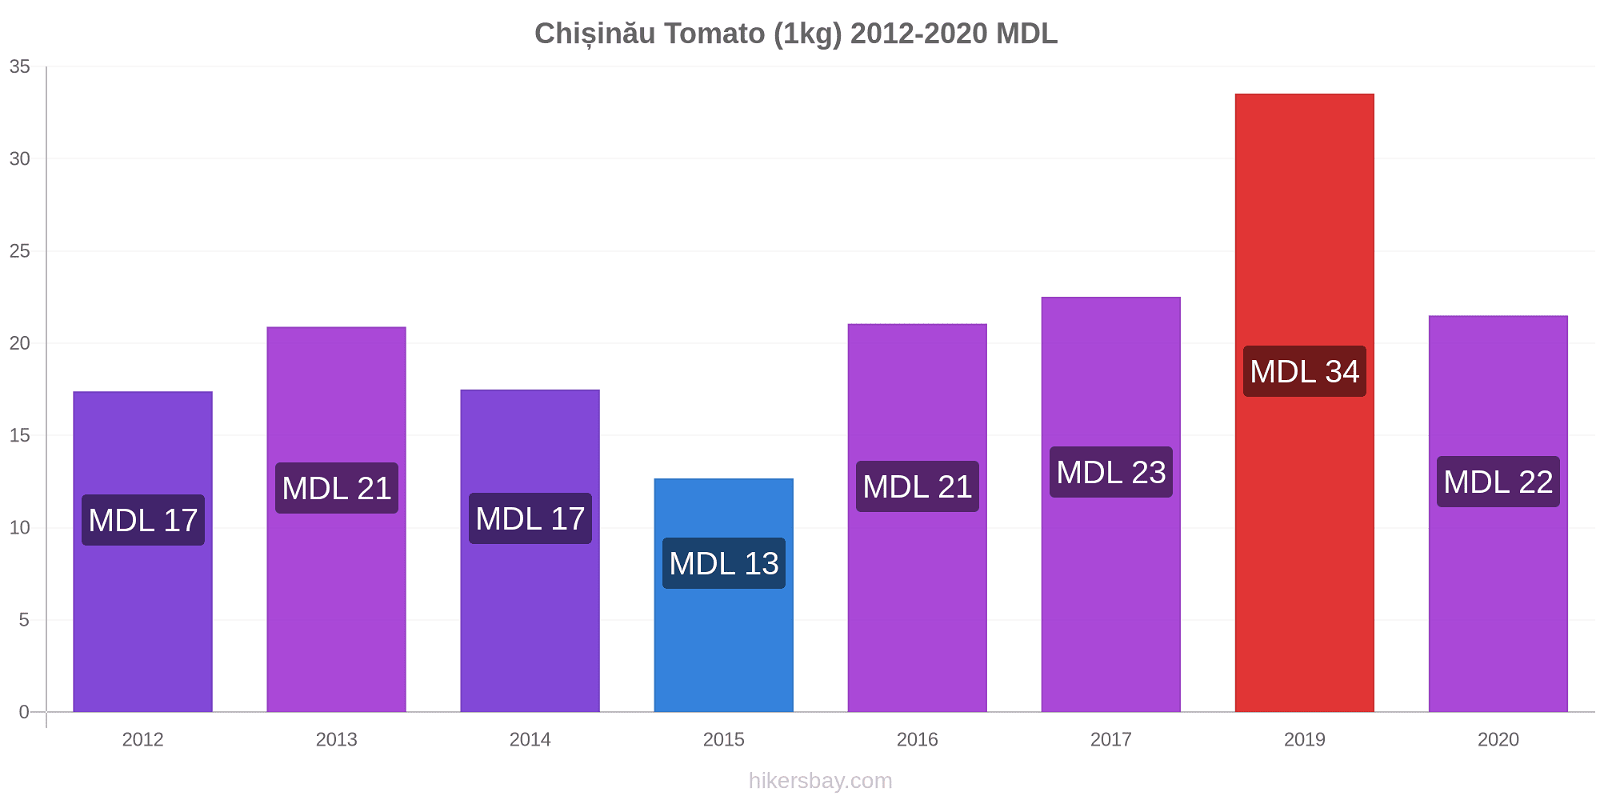 Chișinău price changes Tomato (1kg) hikersbay.com